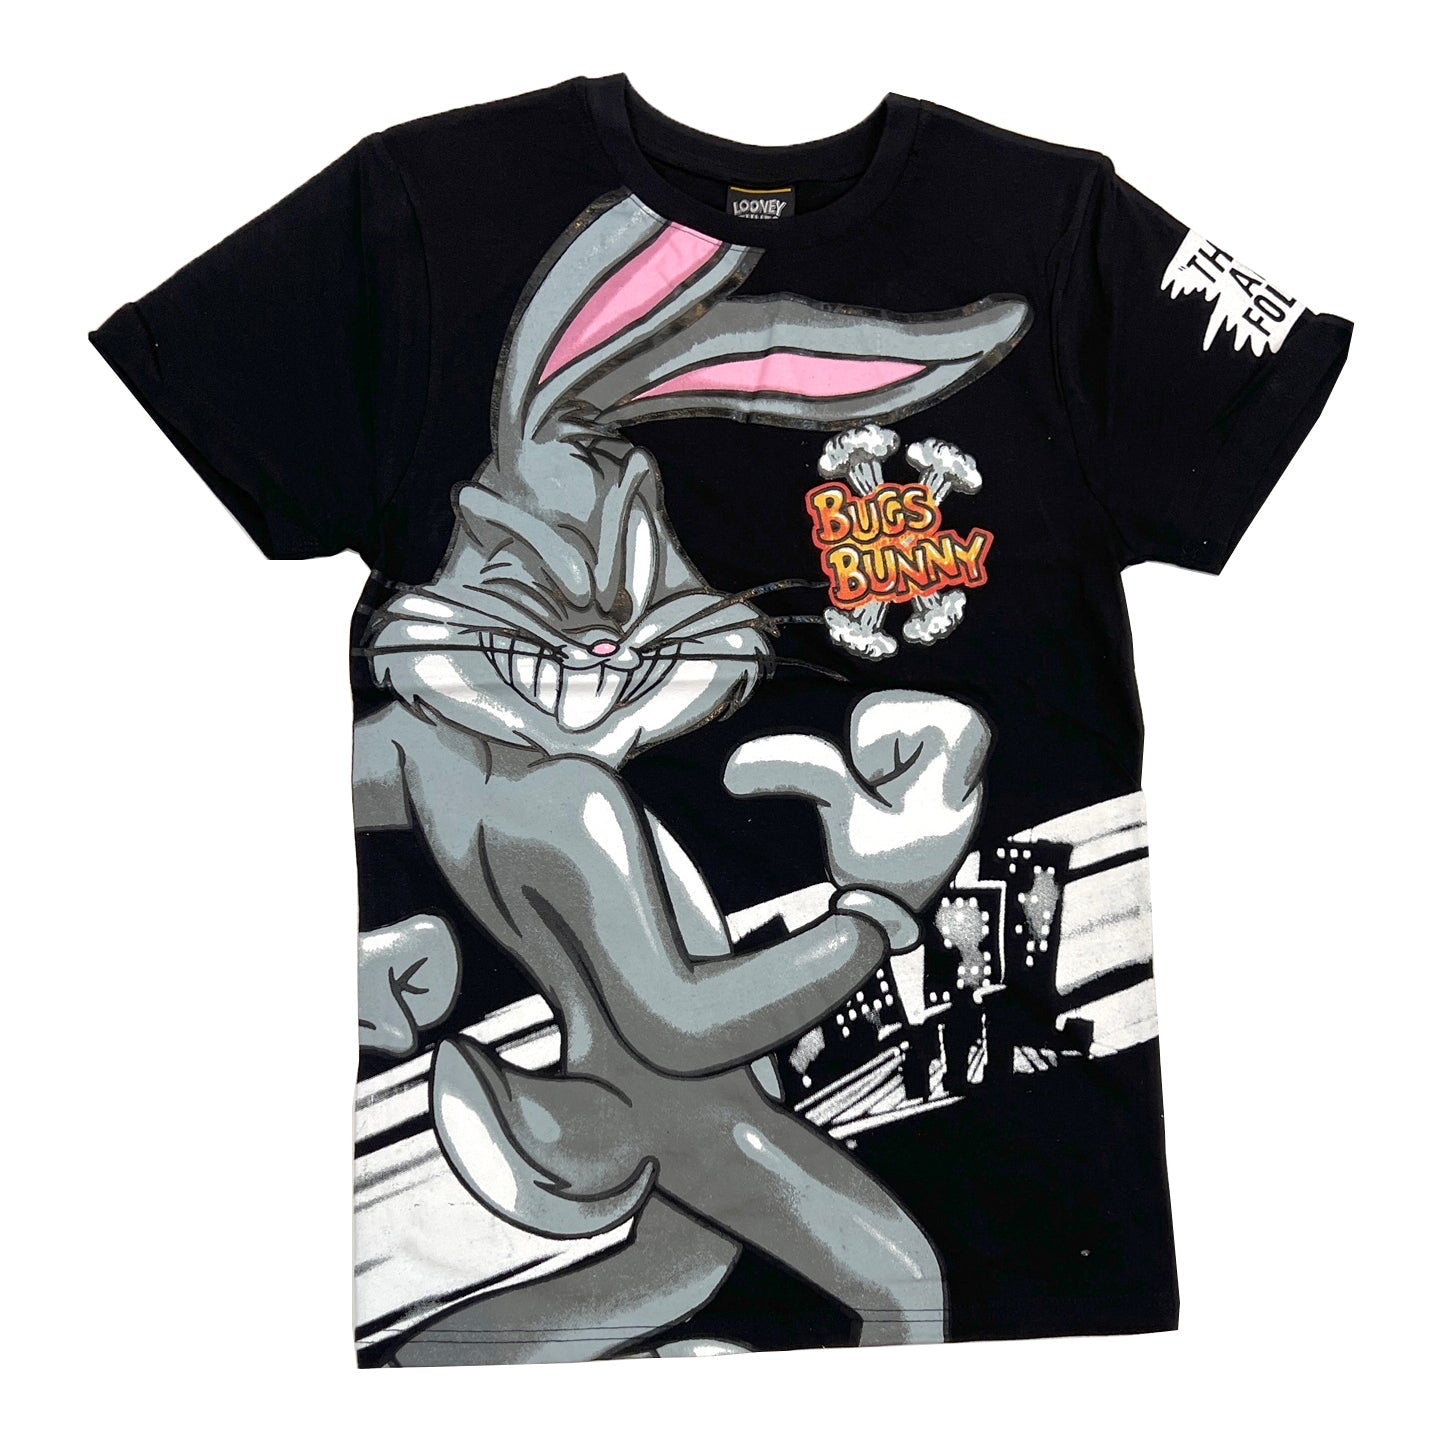 Looney Tunes Bugs Bunny Gel Print Tee (Black) / $16.99 2 for $30